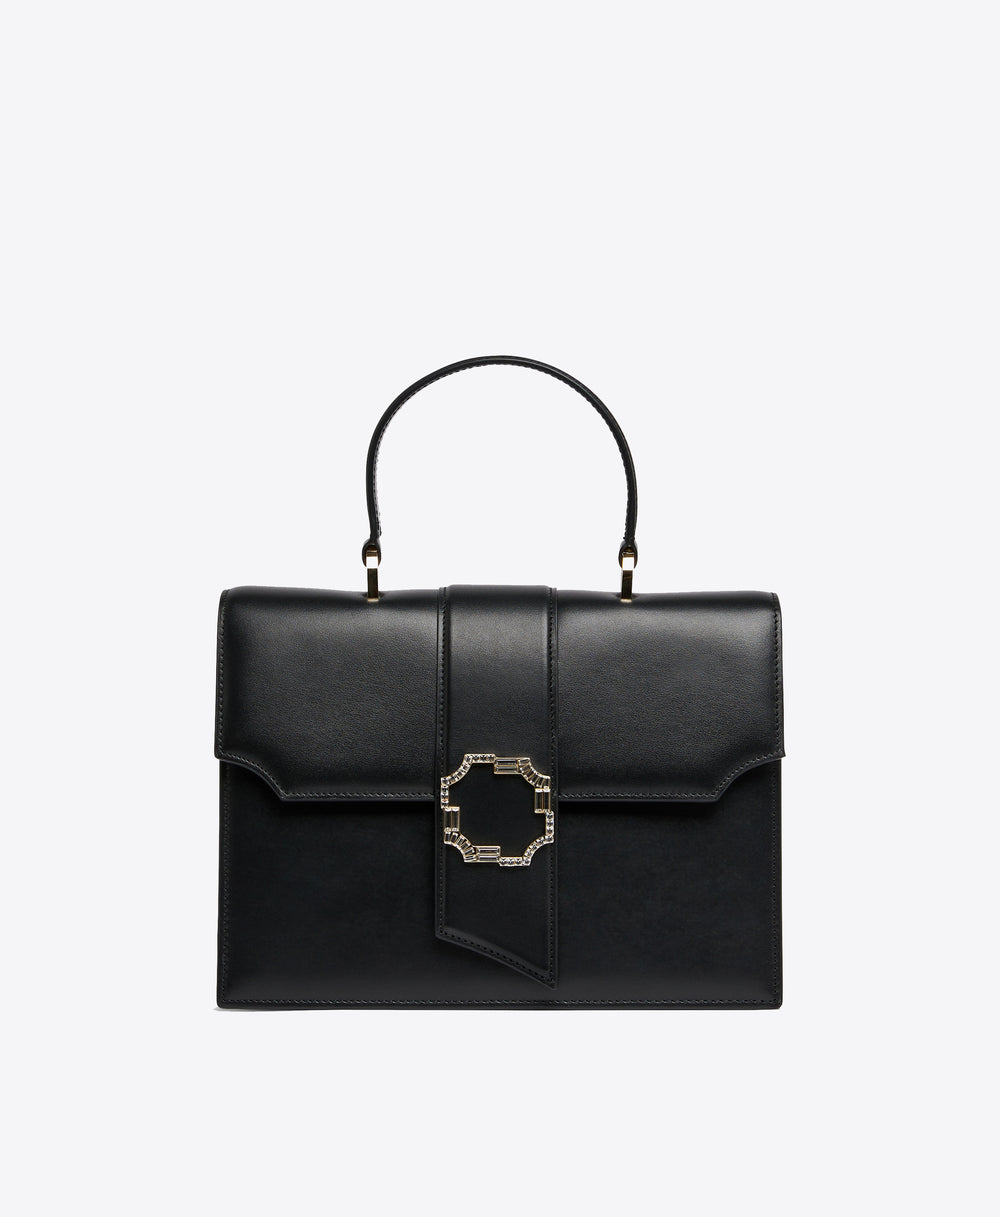 Women's Audrey Black Leather Square Handbag Malone Souliers